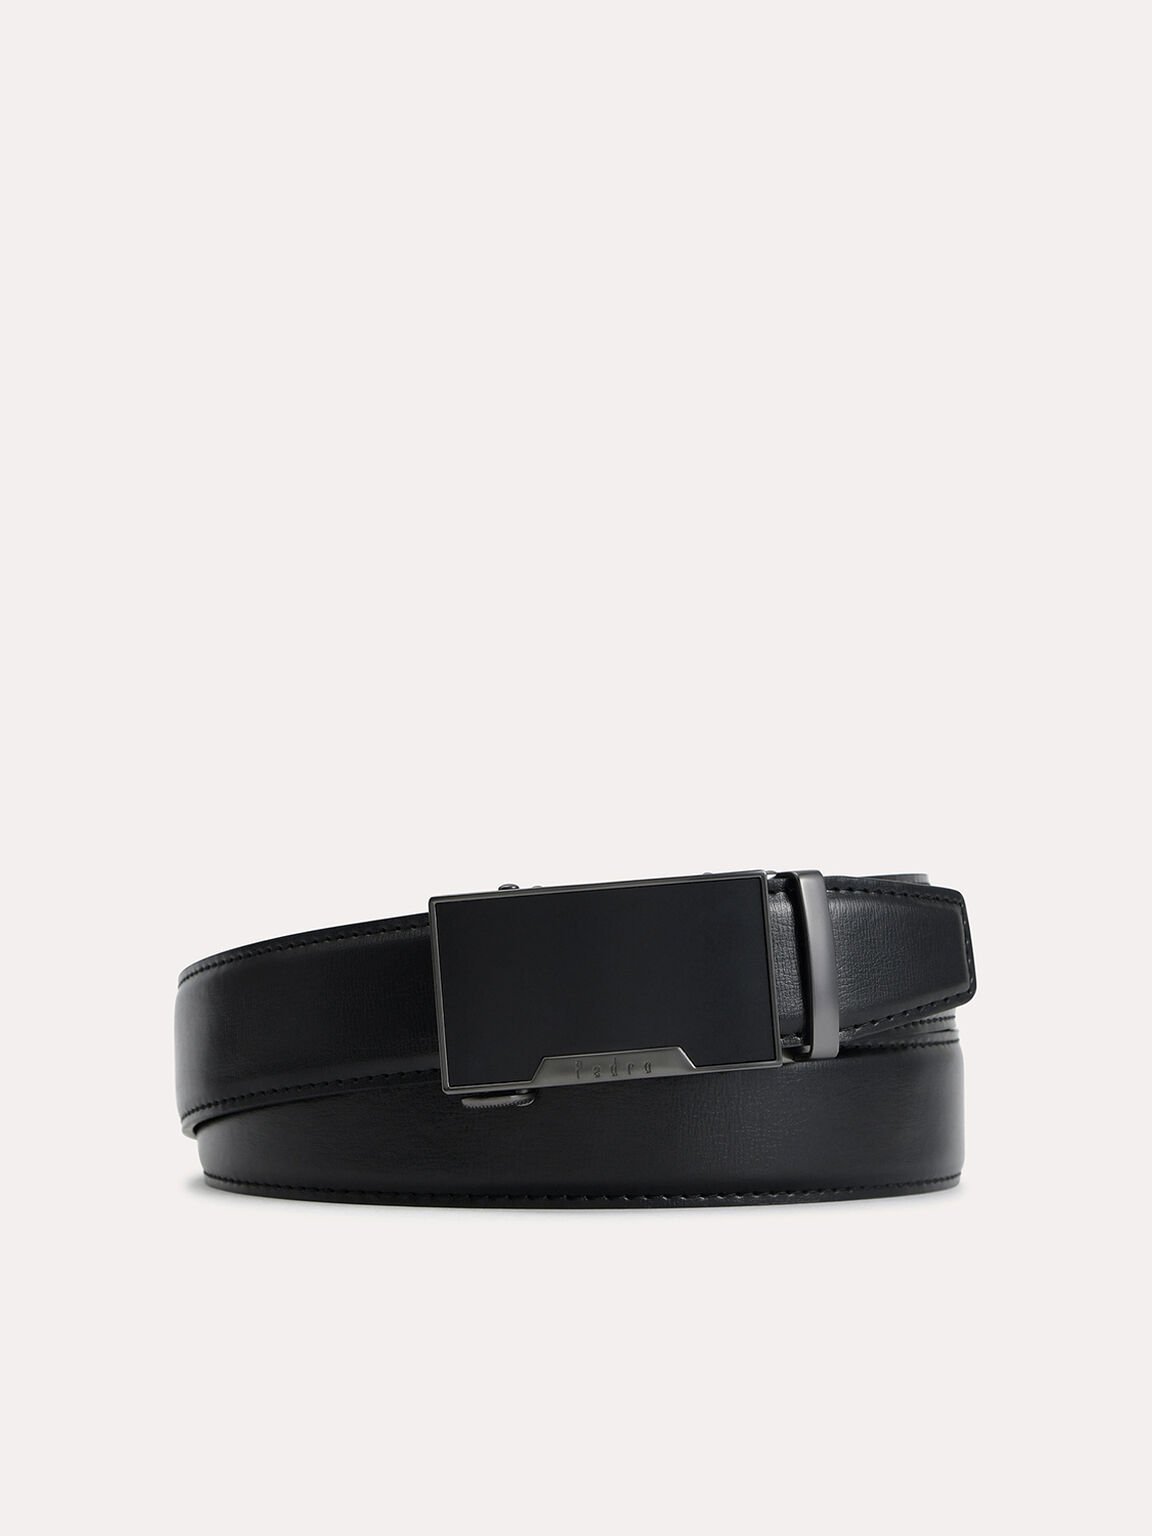 Automatic Textured Leather Belt, Black, hi-res